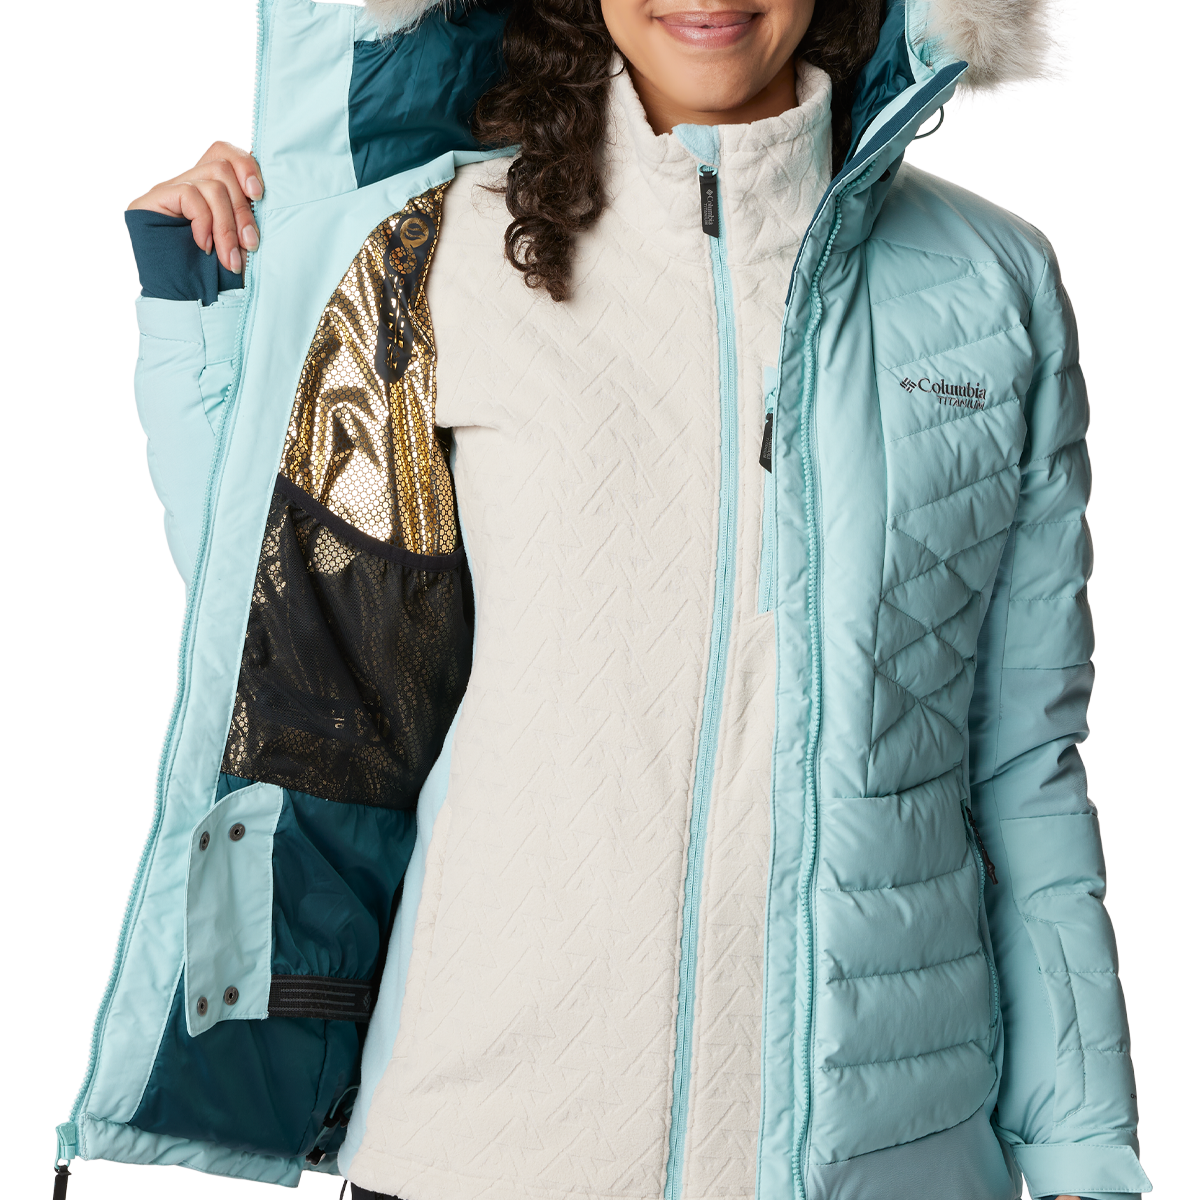 Women's Bird Mountain™ II Insulated Jacket